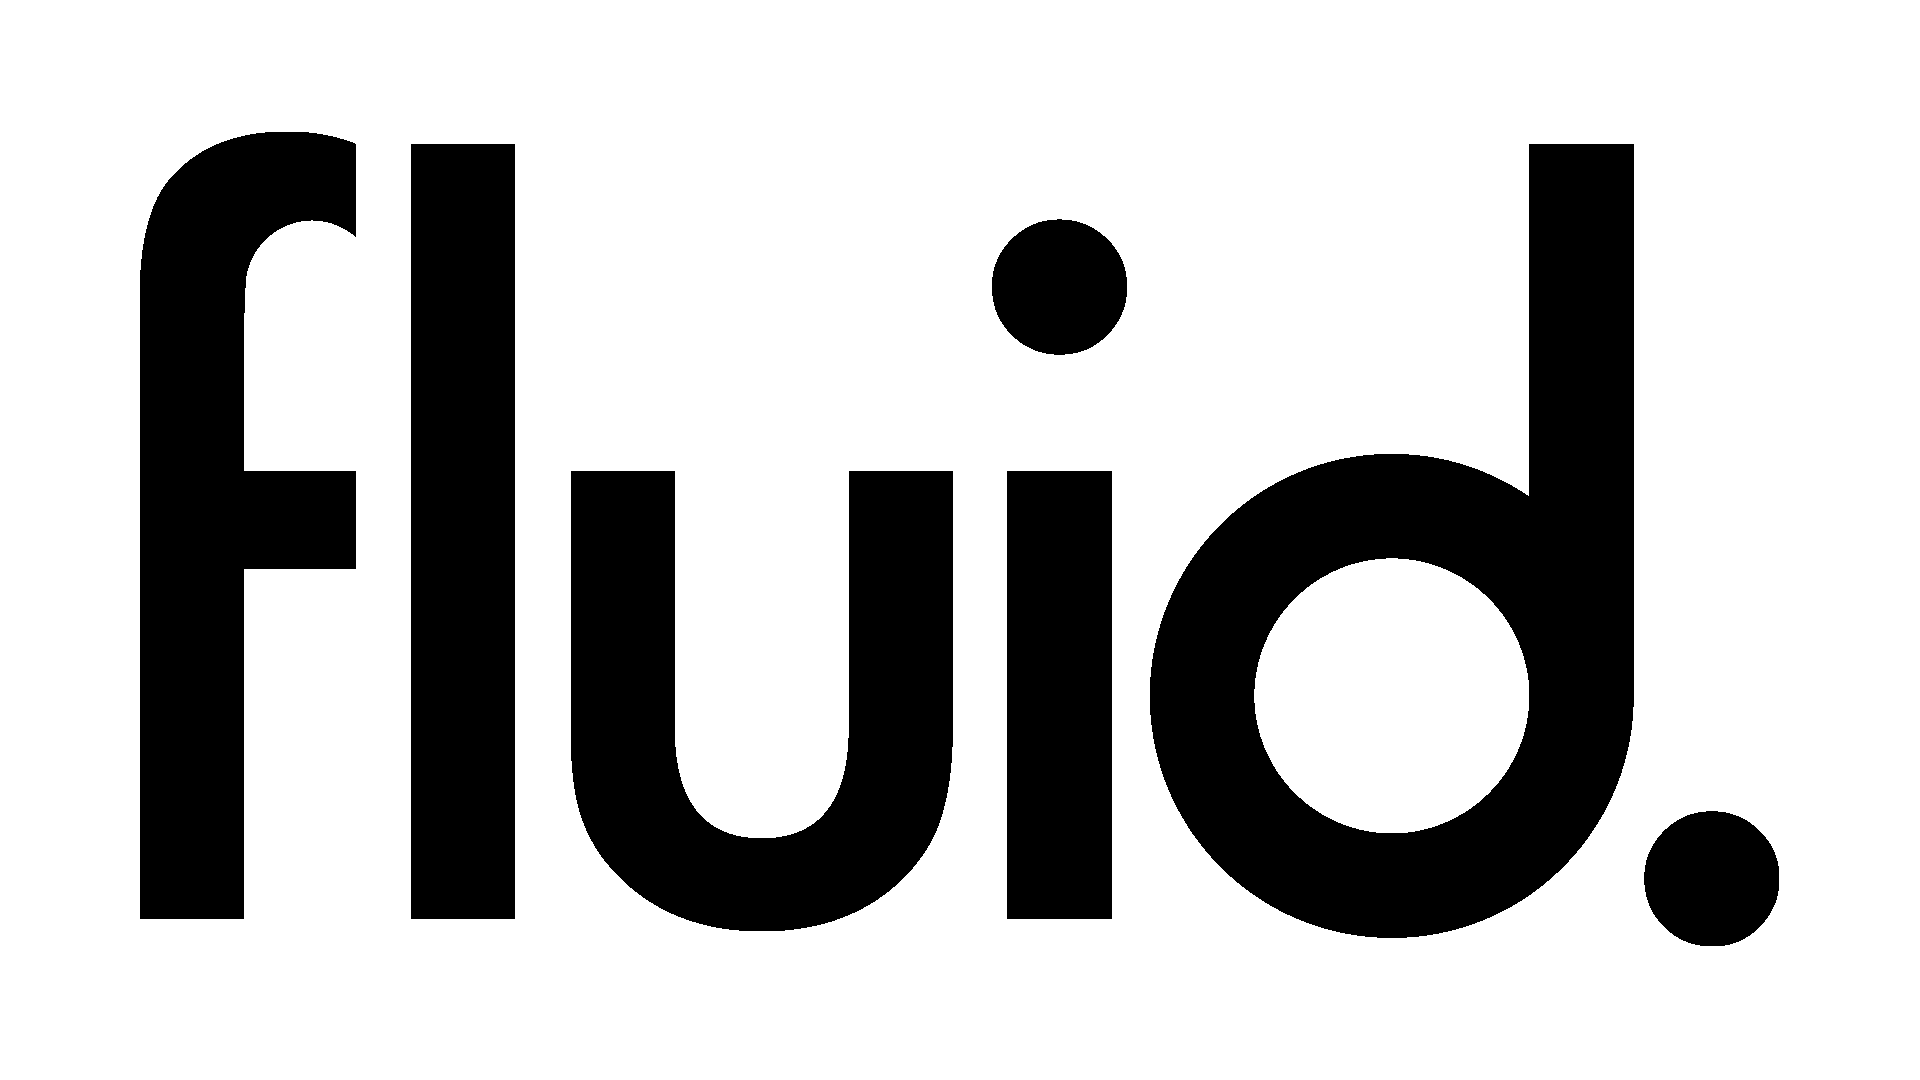 Fluid Logo